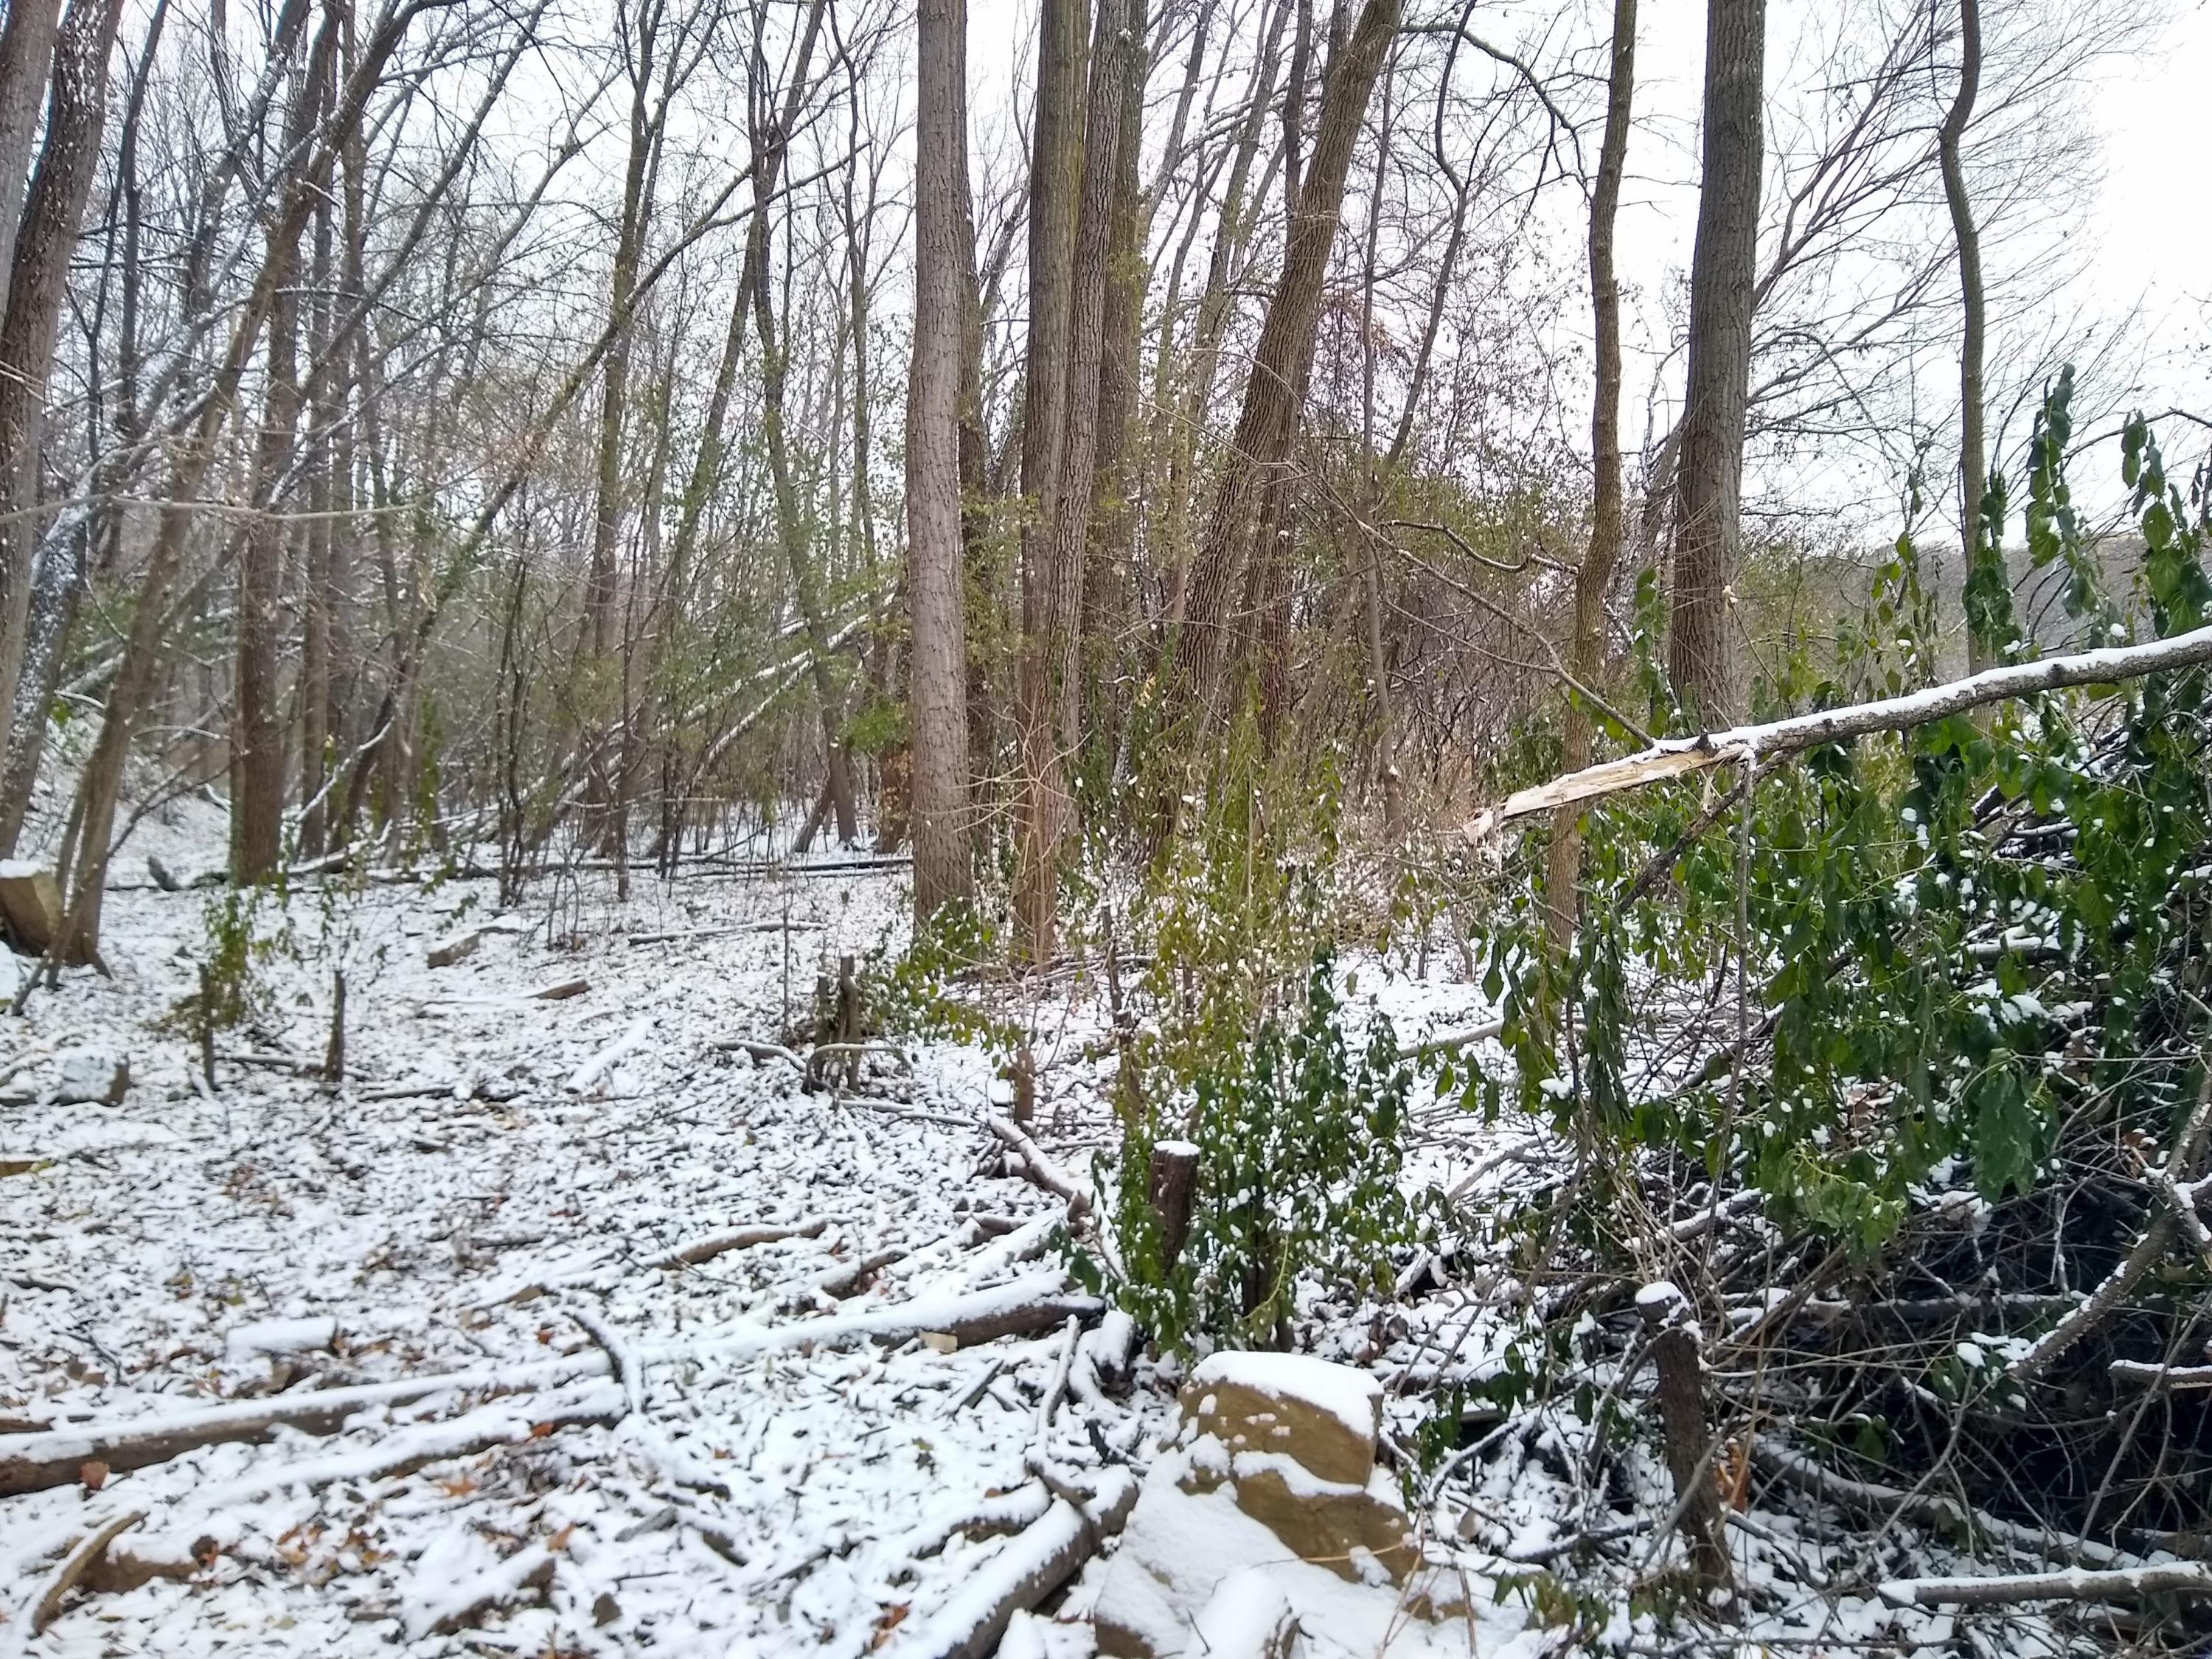 Green buckthorn in winter